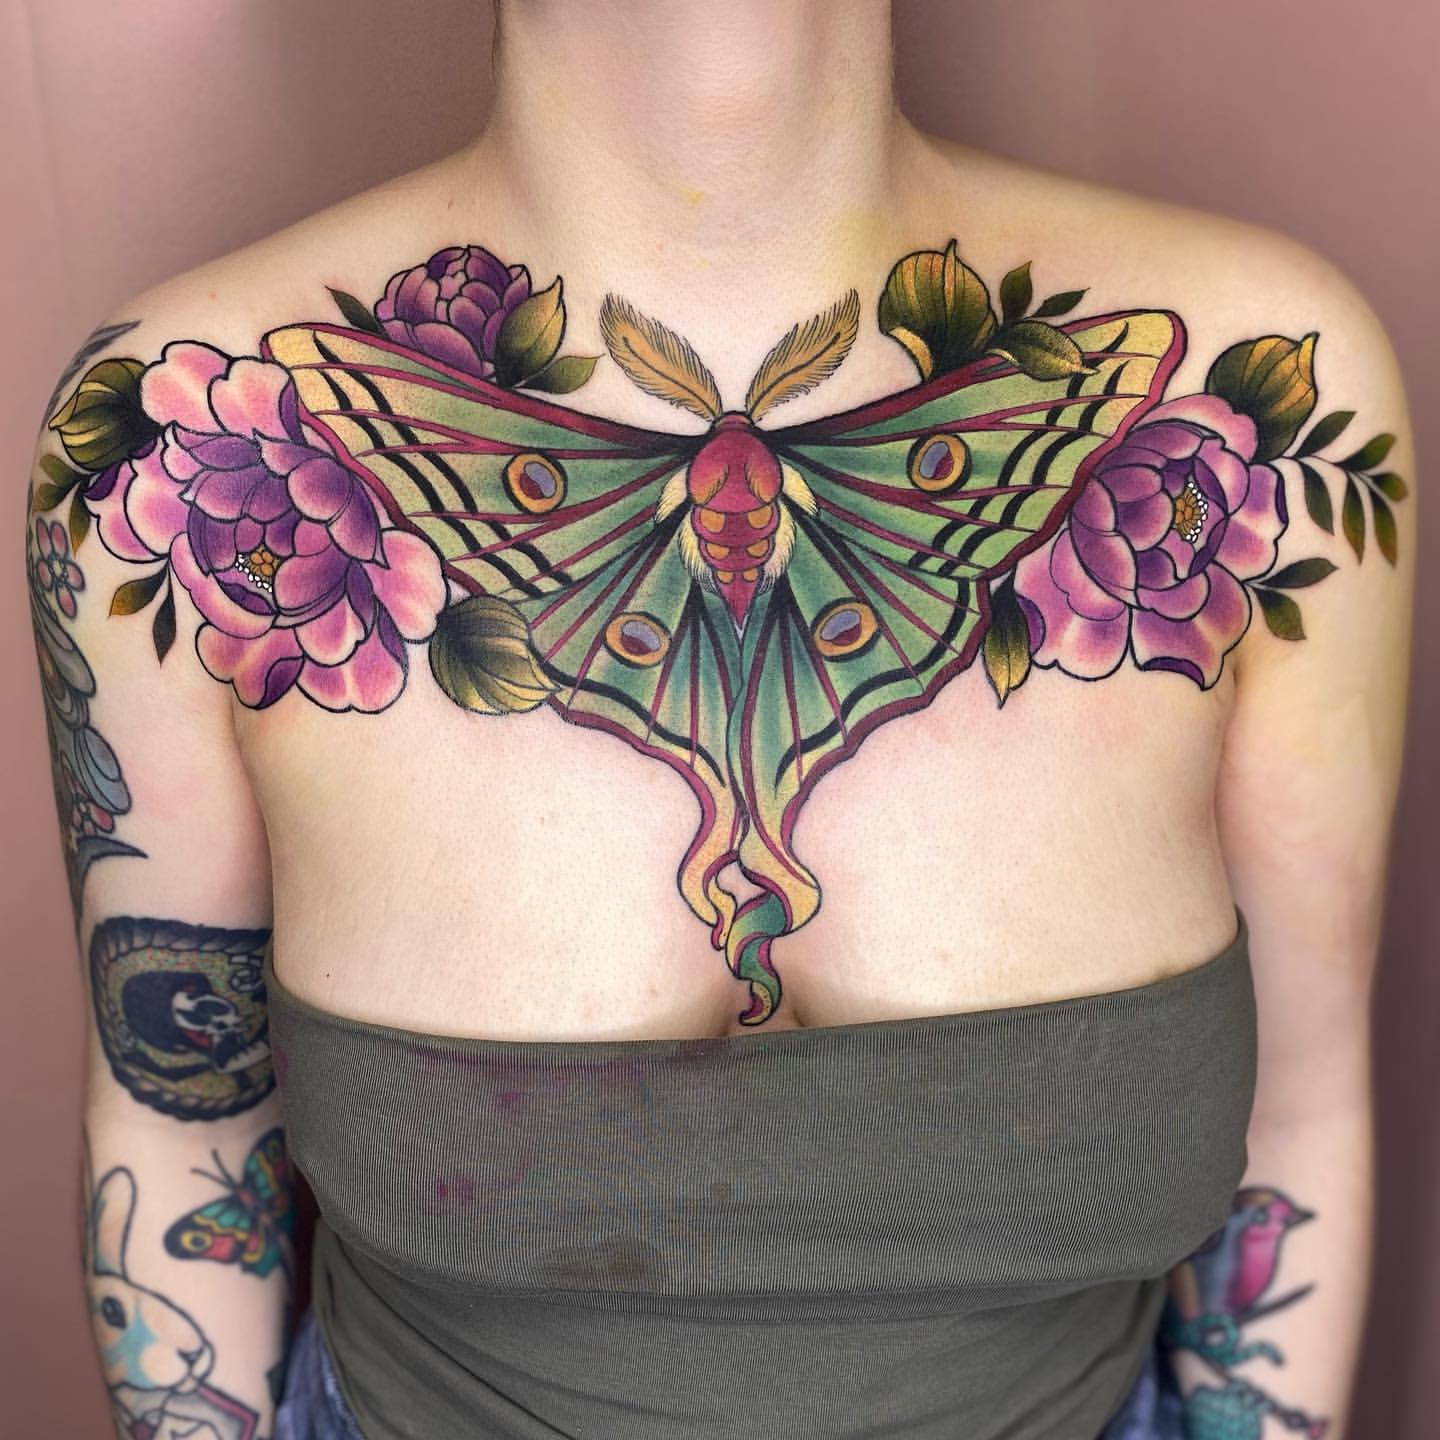 25 Stunning Moth Tattoo Ideas For Men & Women in 2023